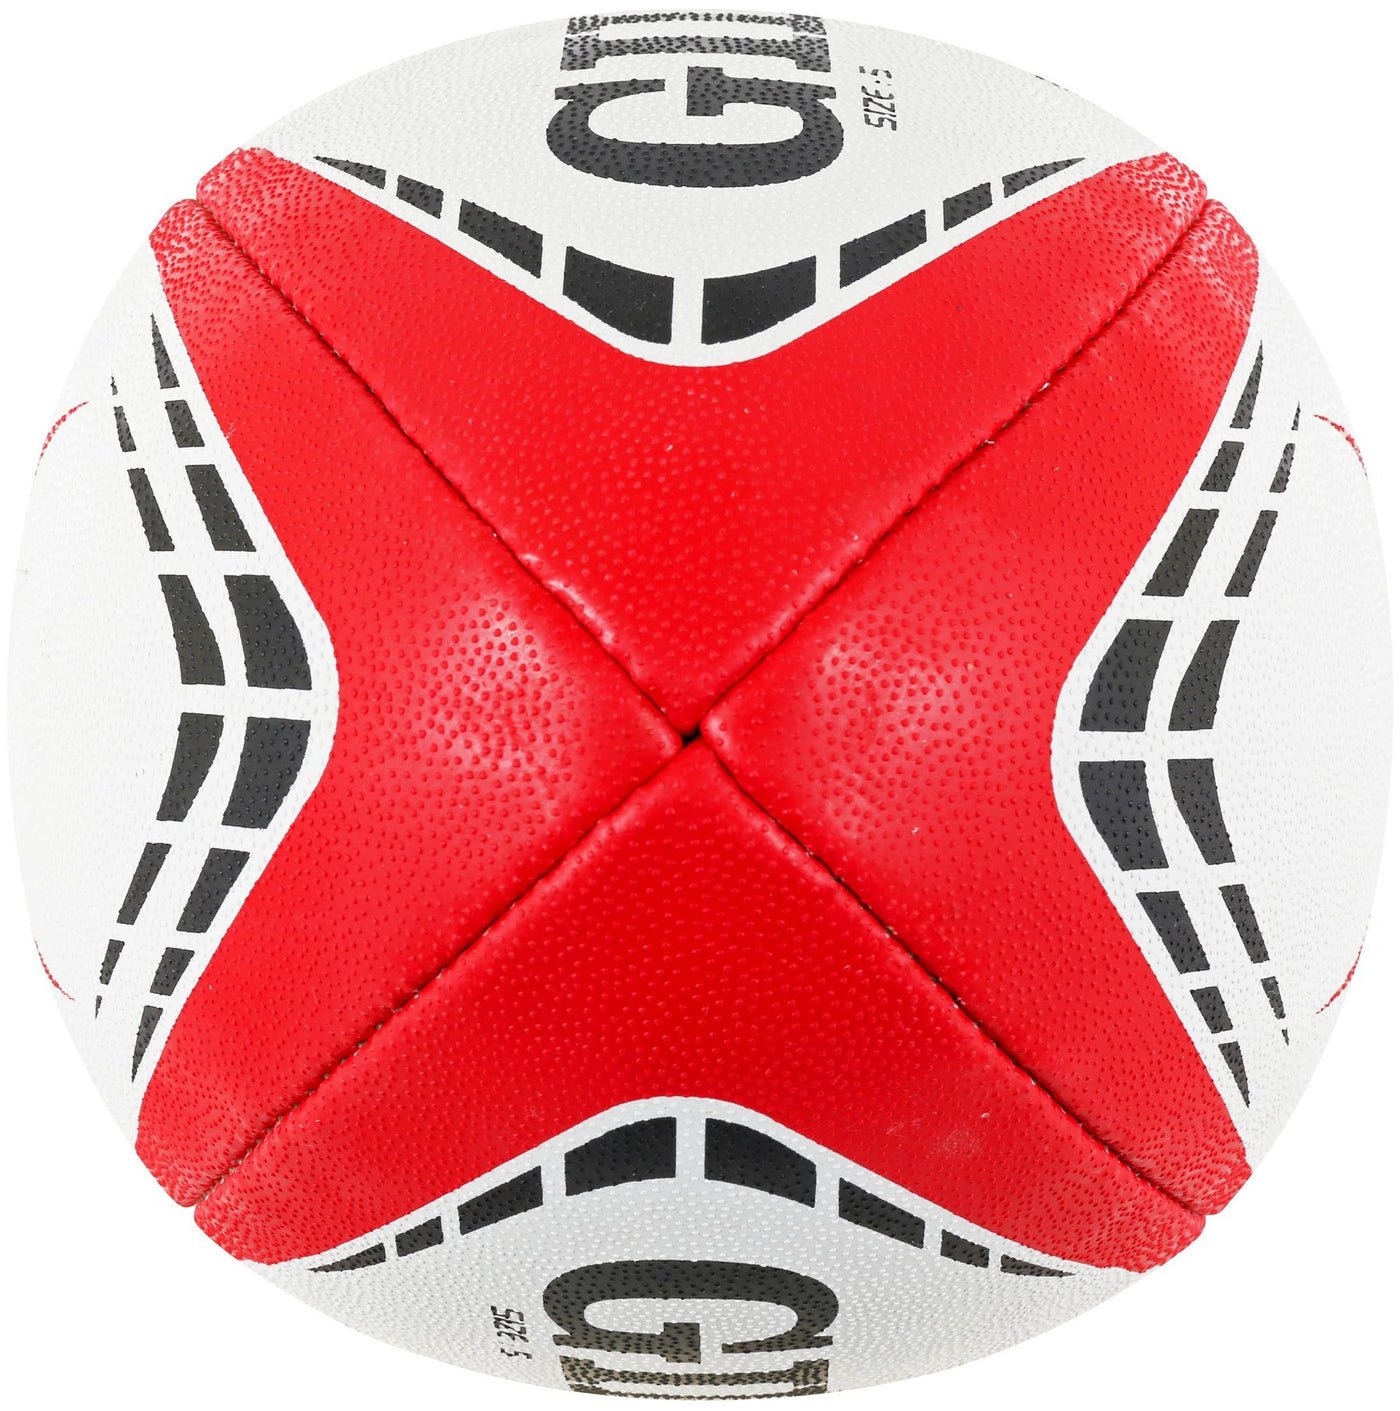 G-TR4000 Ballon de Rugby Rouge Taille 3